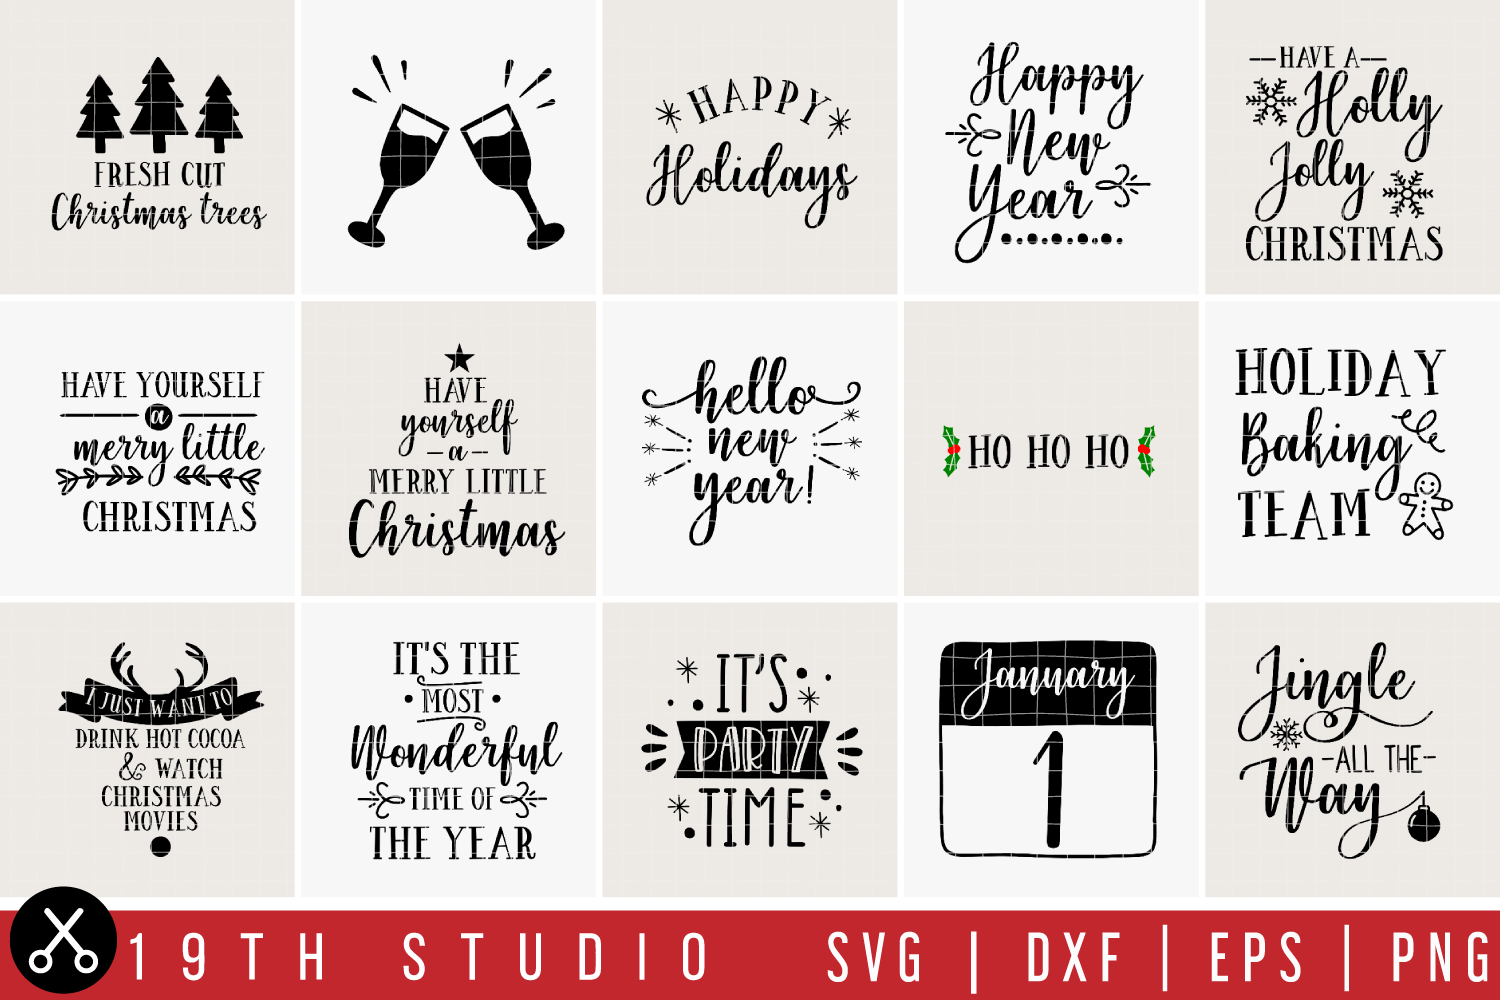 Mega Holidays SVG Bundle - M21 Craft House SVG - SVG files for Cricut and Silhouette